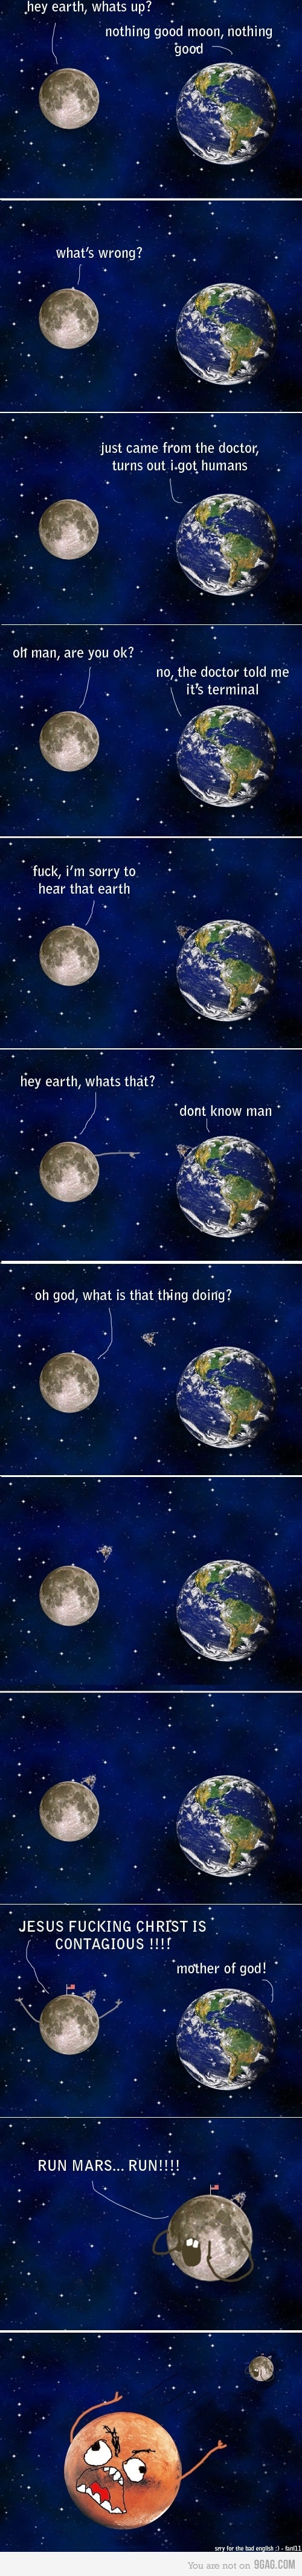 Earth-Mars-Moon-Human-Destruction.jpg